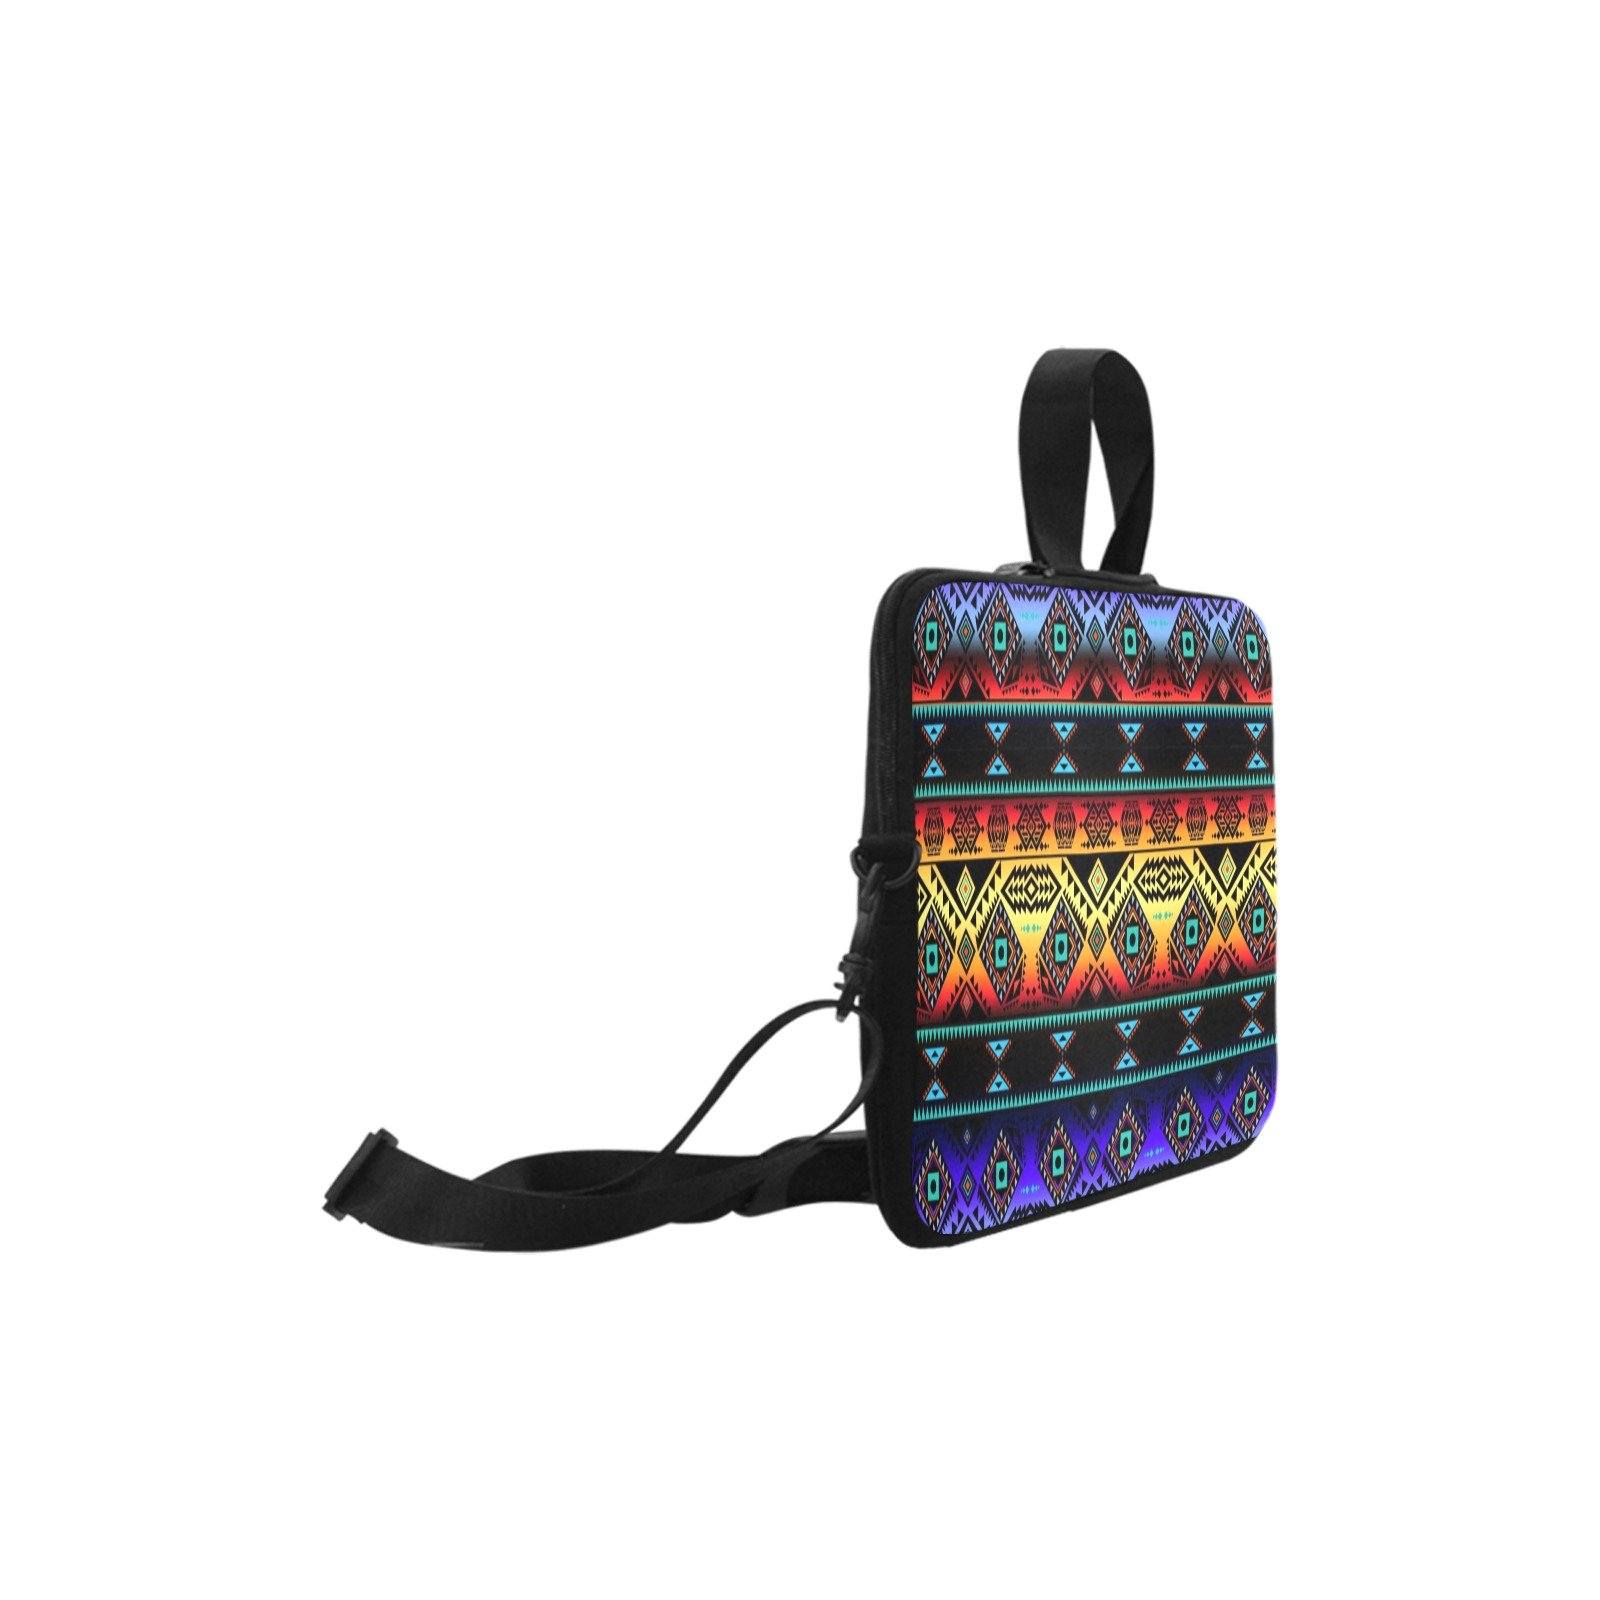 California Coast Sunset Laptop Handbags 10" bag e-joyer 